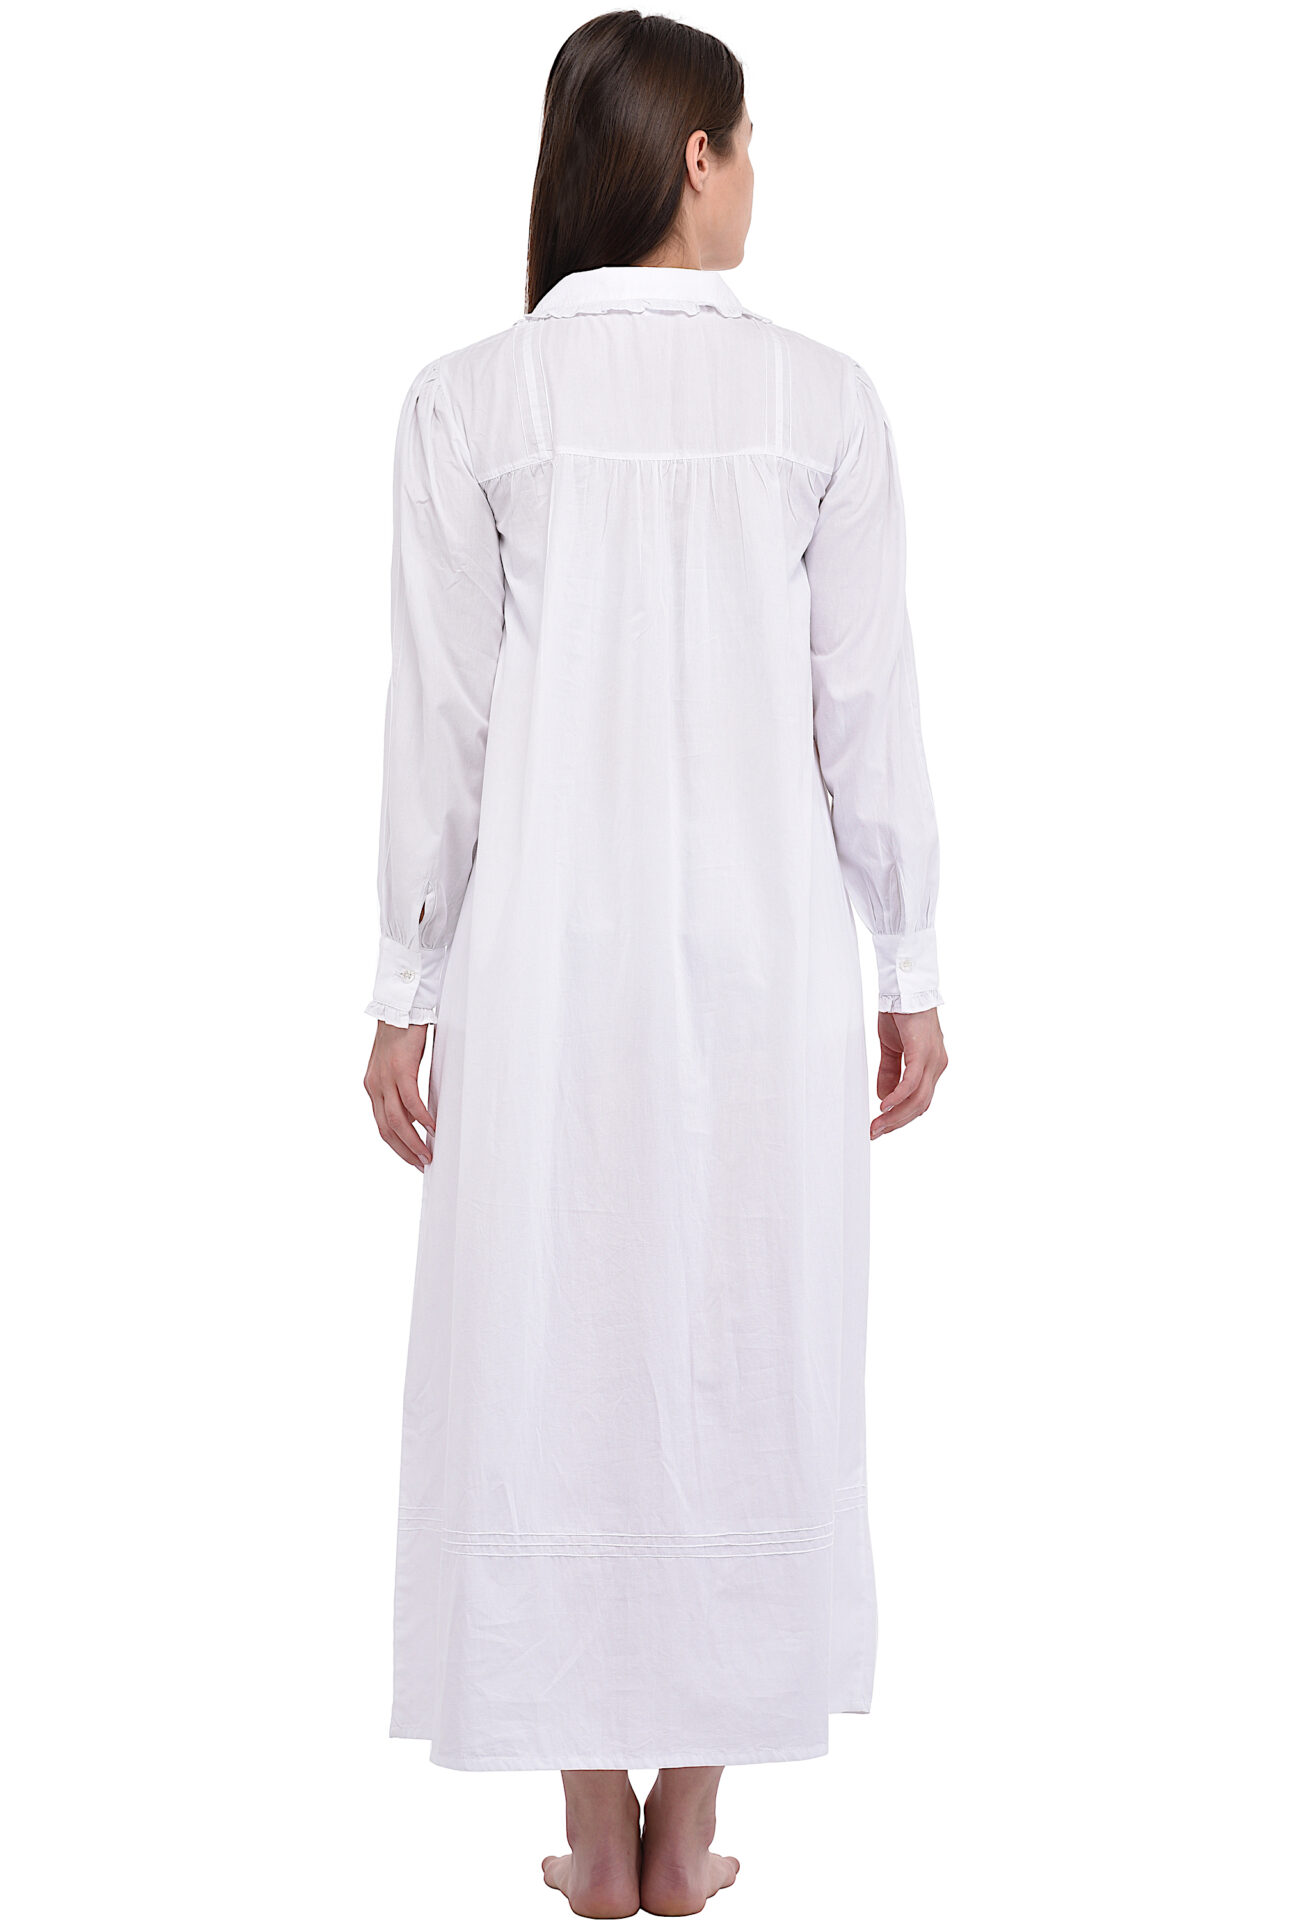 Peter Pan Collar White Cotton Nightdress Plus Size – Cotton Lane – London